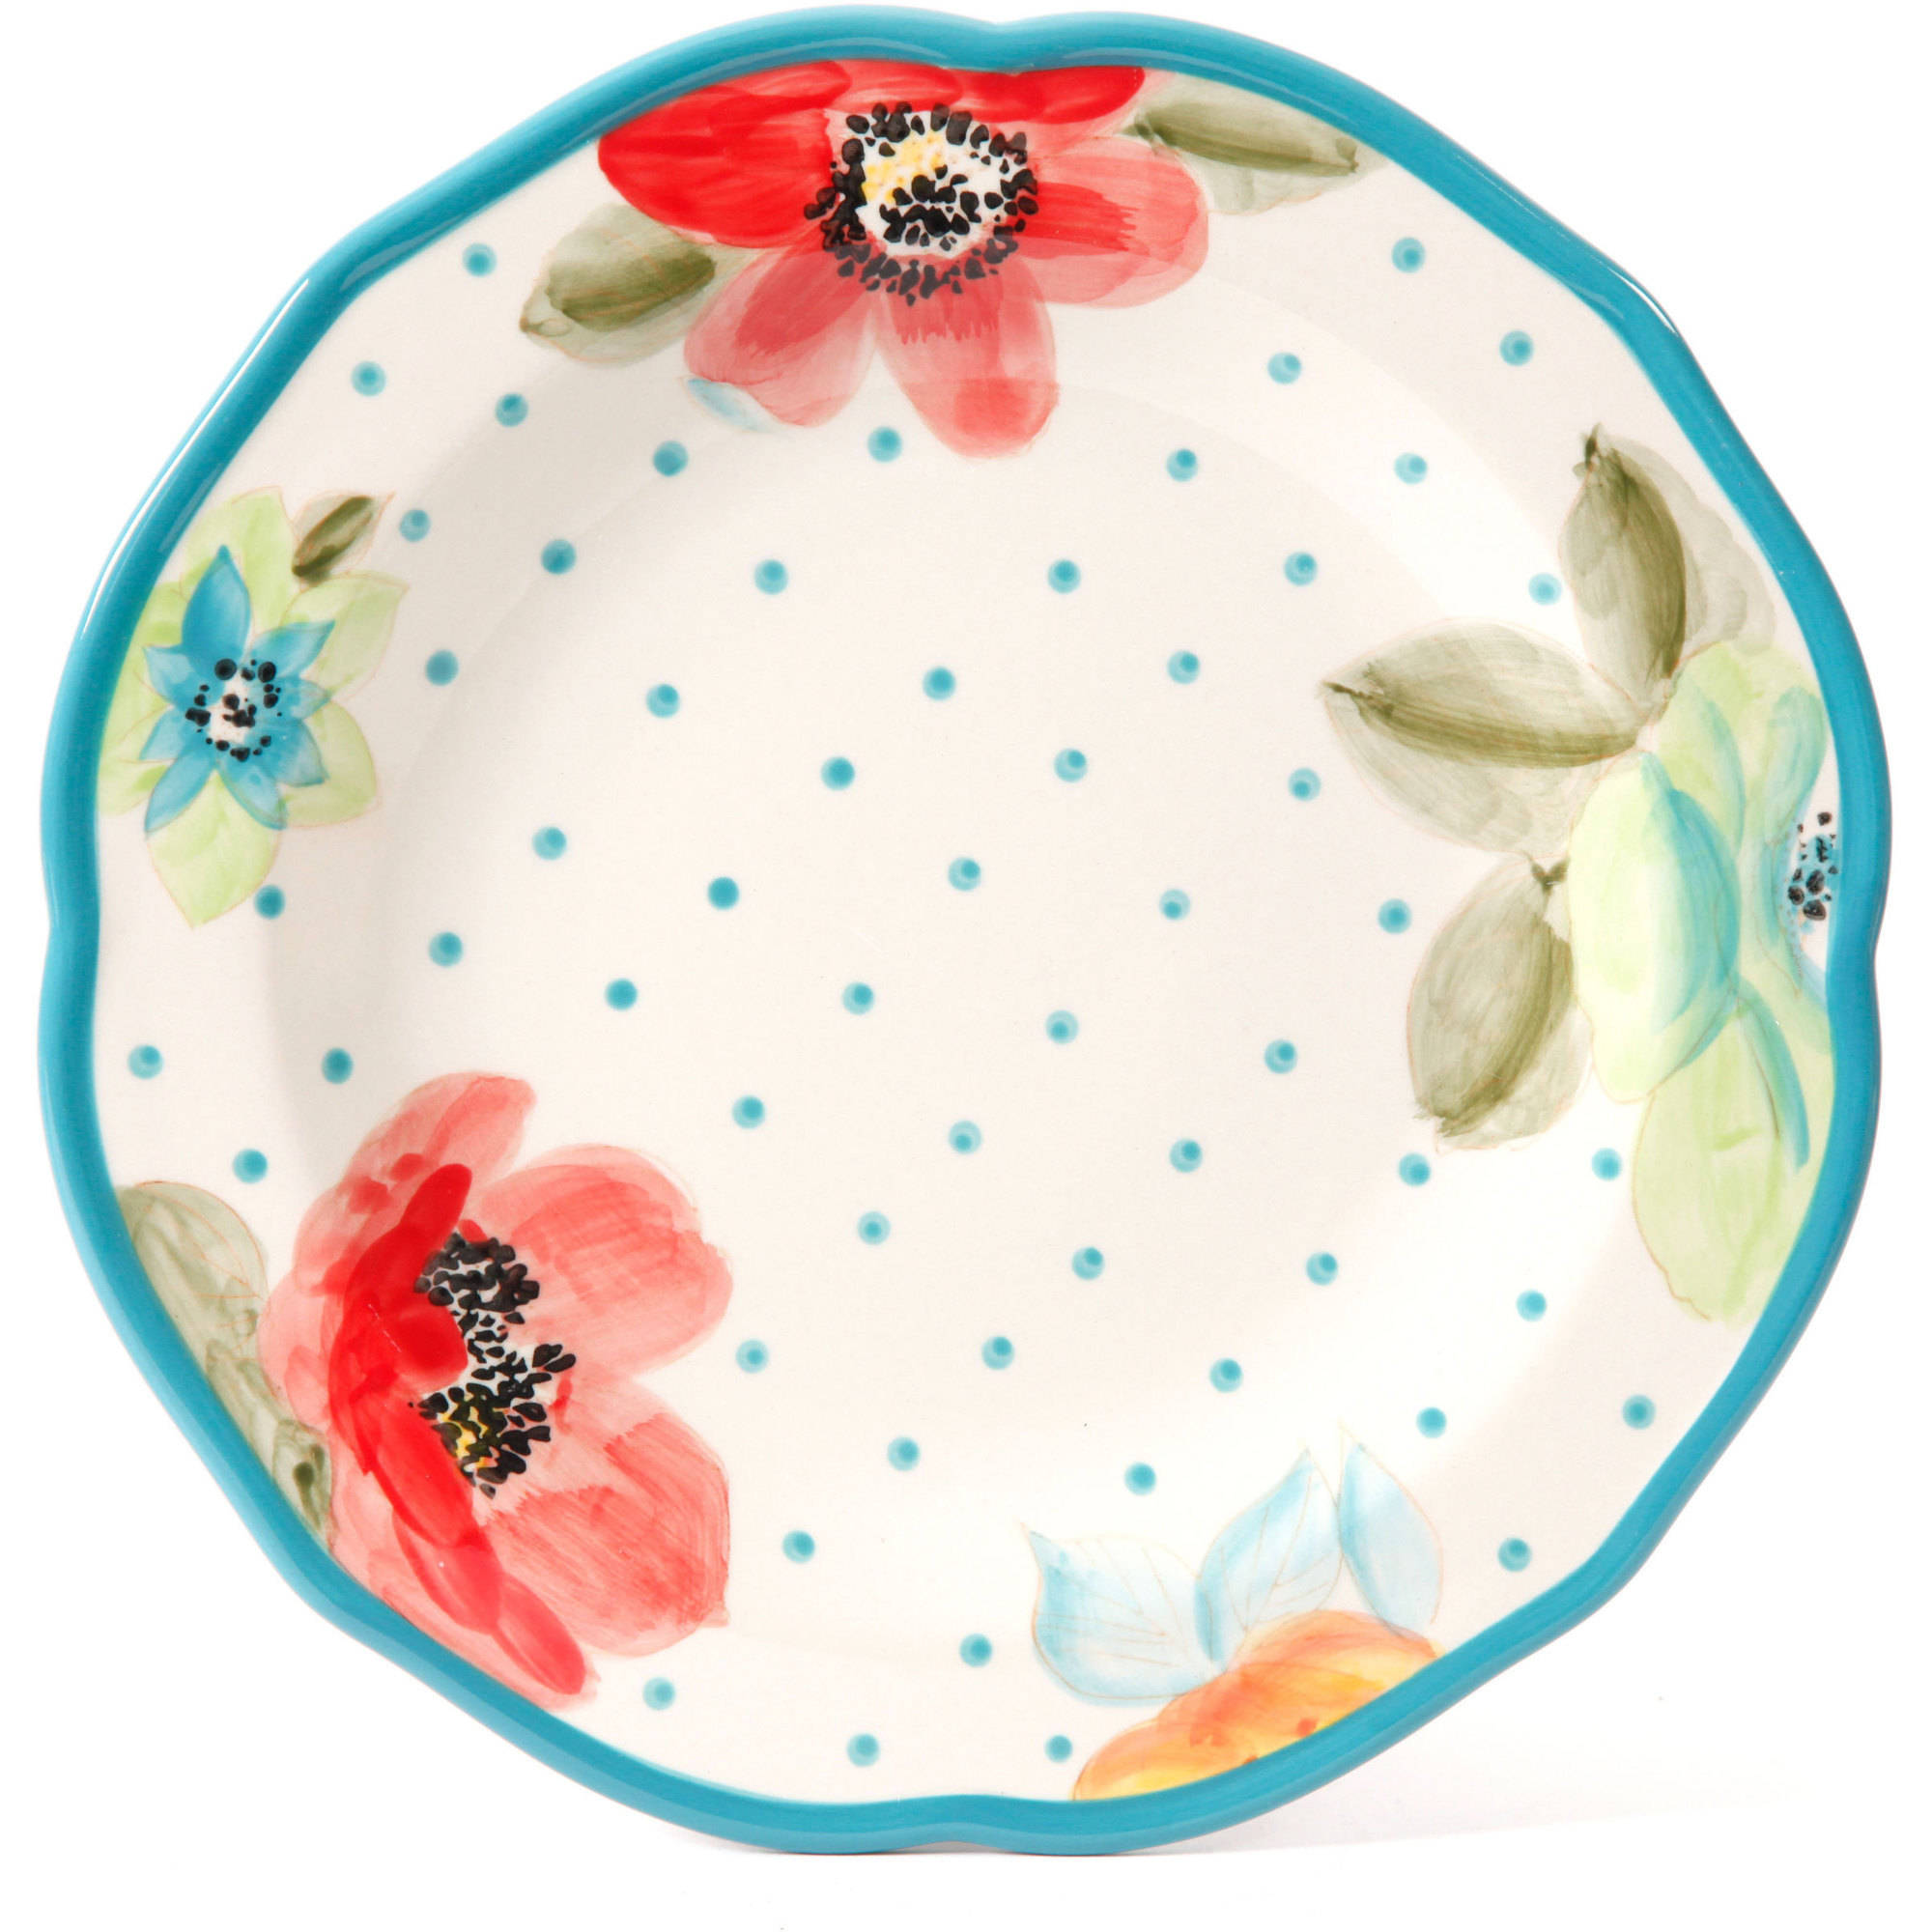 The Pioneer Woman Vintage Bloom 12-Piece Dinnerware Set, Turquoise - image 2 of 5